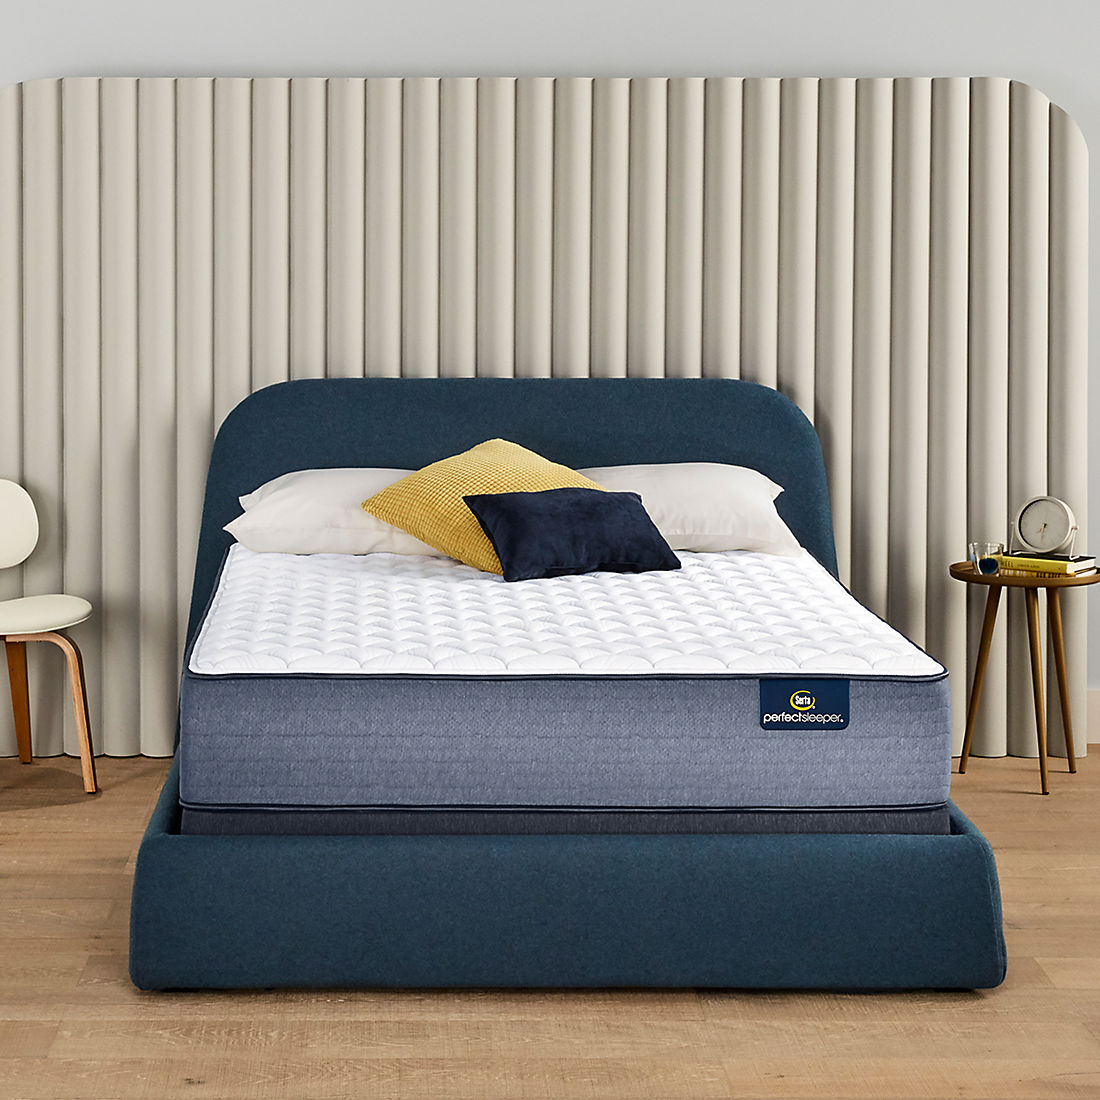 Serta Perfect Sleeper Cobalt Coast Firm, Bjs Twin Bed